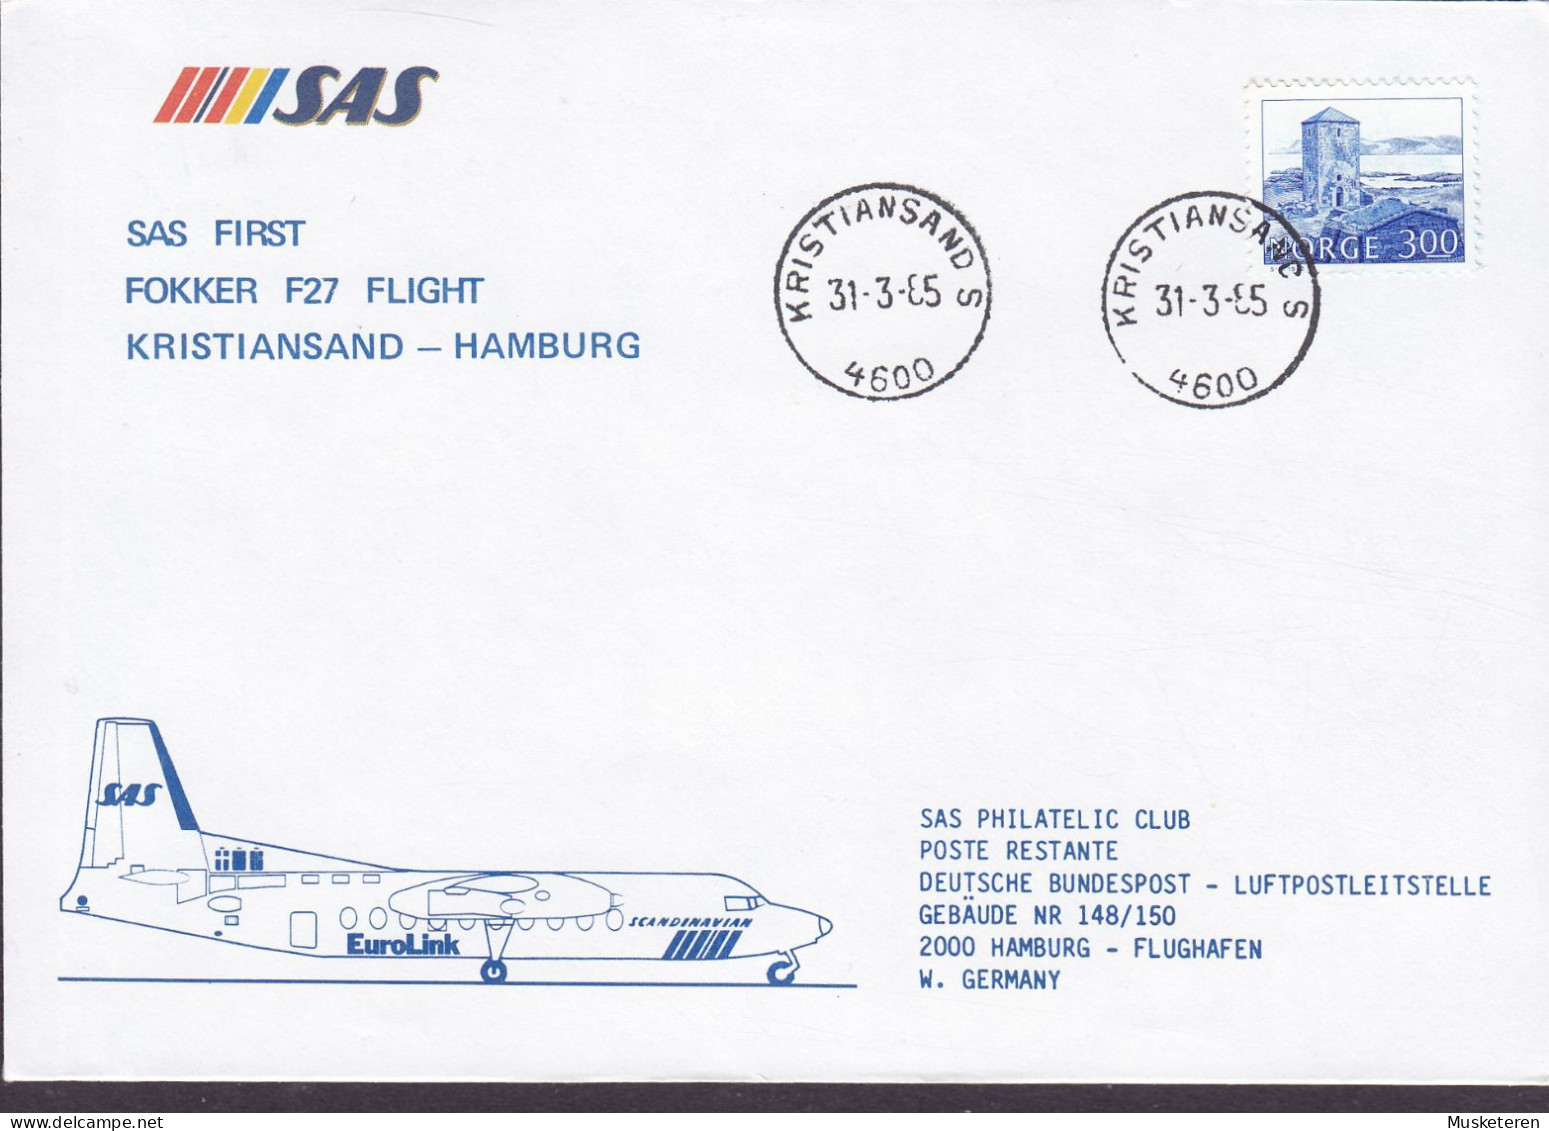 Norway SAS First Fokker F27 Flight KRISTIANSAND-HAMBURG 1985 Cover Brief Lettre Kloster Selje, Selja Stamp - Cartas & Documentos